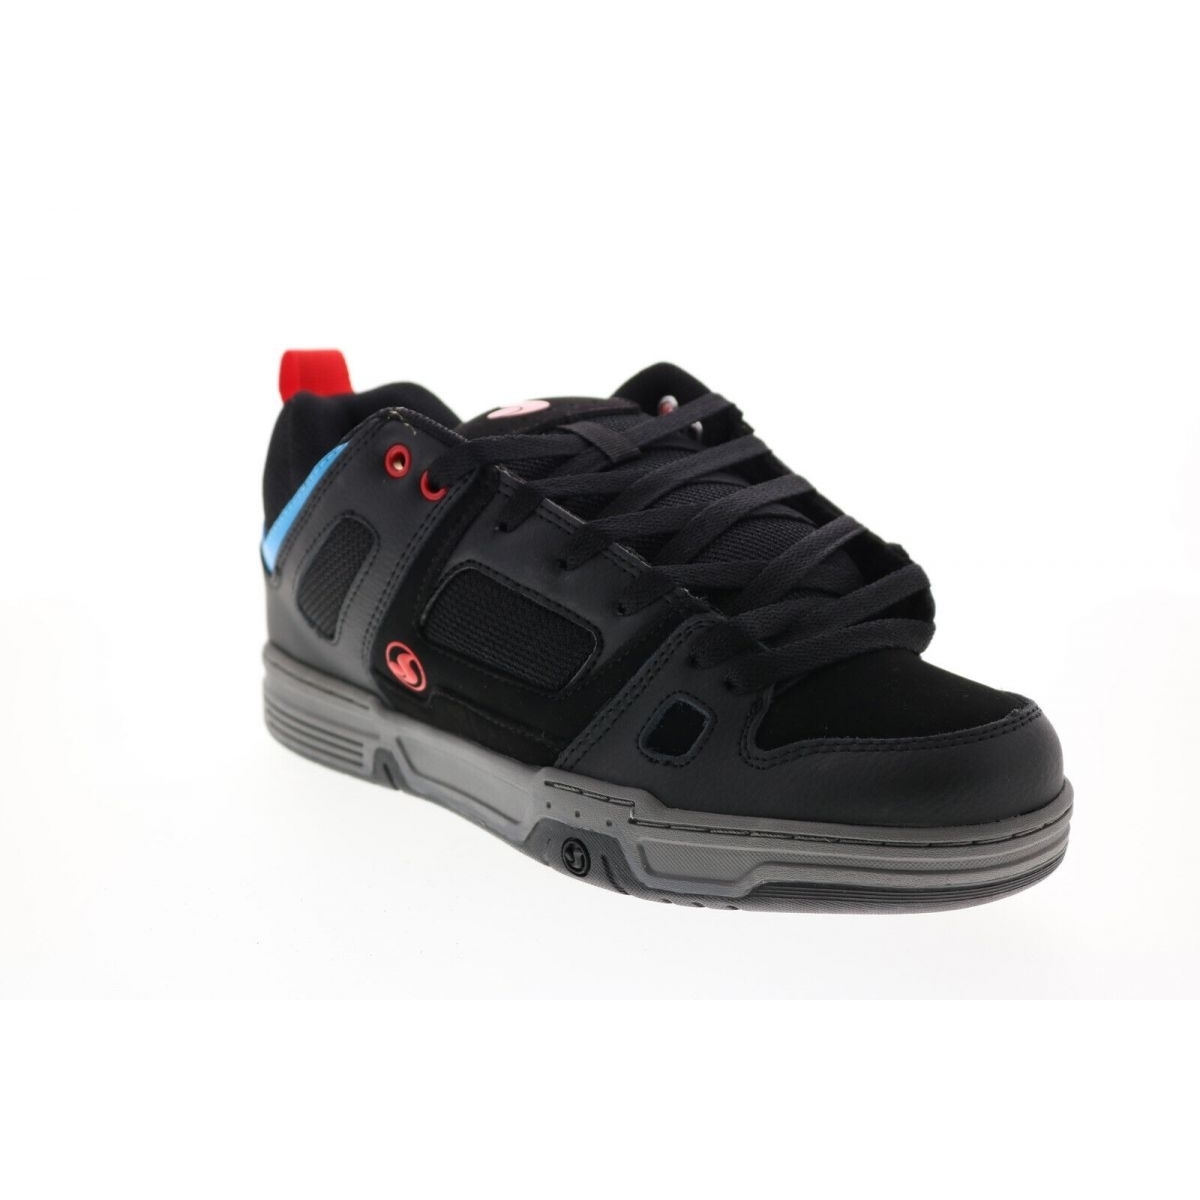 DVS Men's Gambol Skate Shoe 0 BLACK FIERY RED BLUE NUBUCK - BLACK FIERY RED BLUE NUBUCK, 9